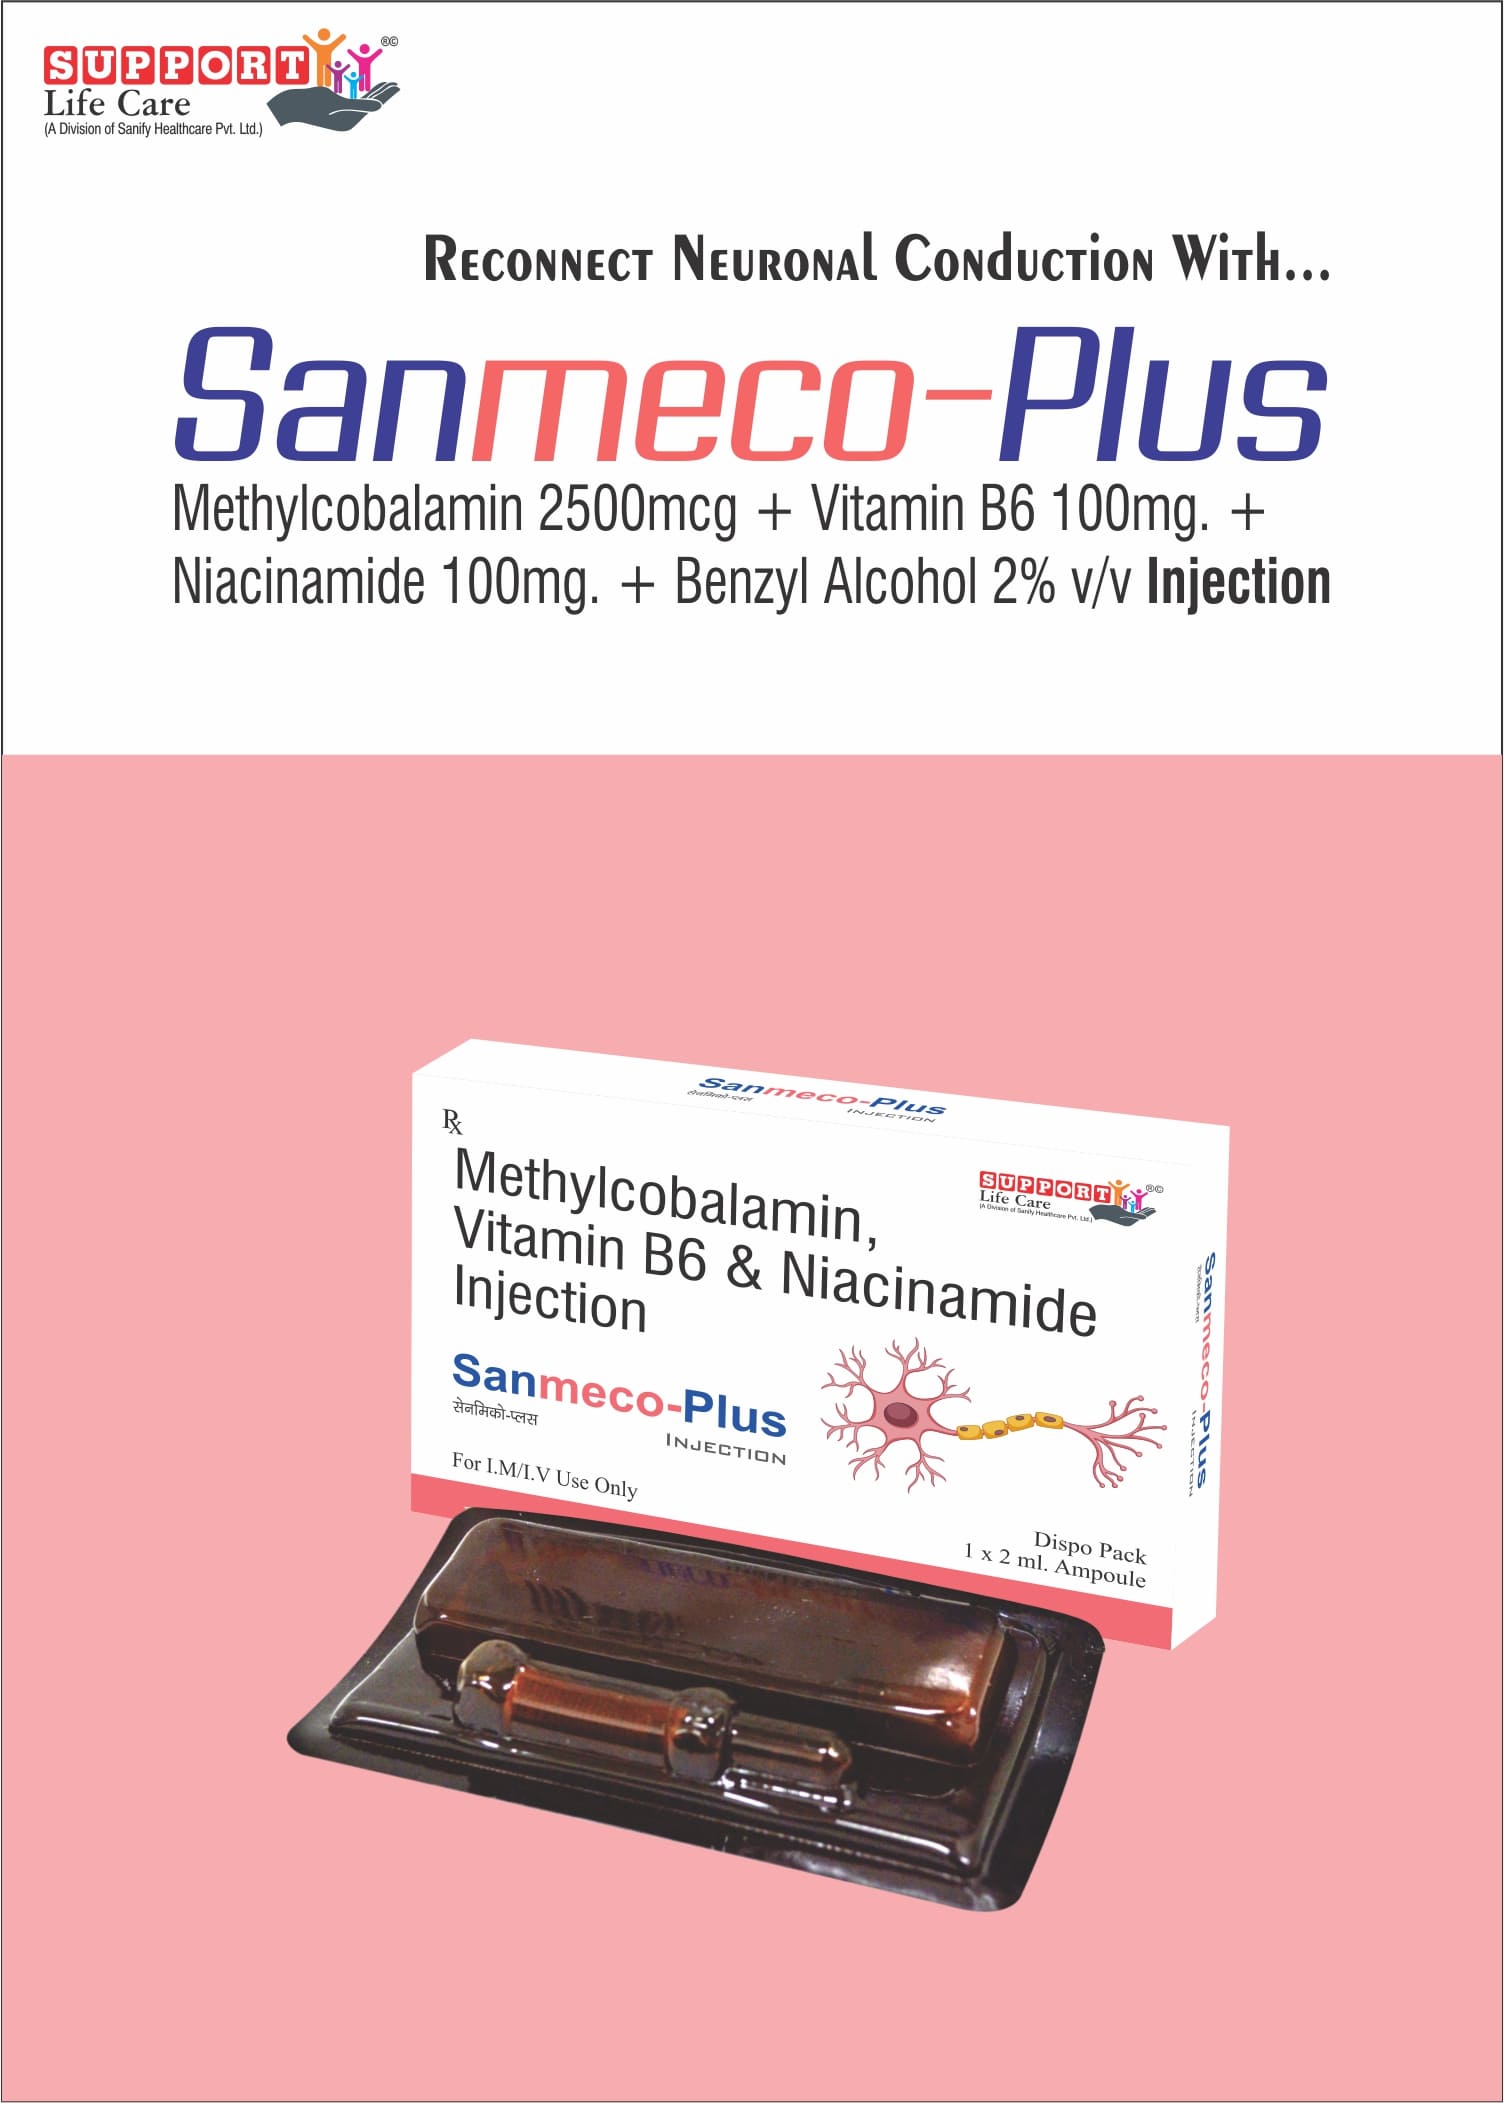 Methylcobalamin 2500mcg, Vitamin B6 100mg, Nicinamide 100mg, Benzyl Alcohol 2% Injection